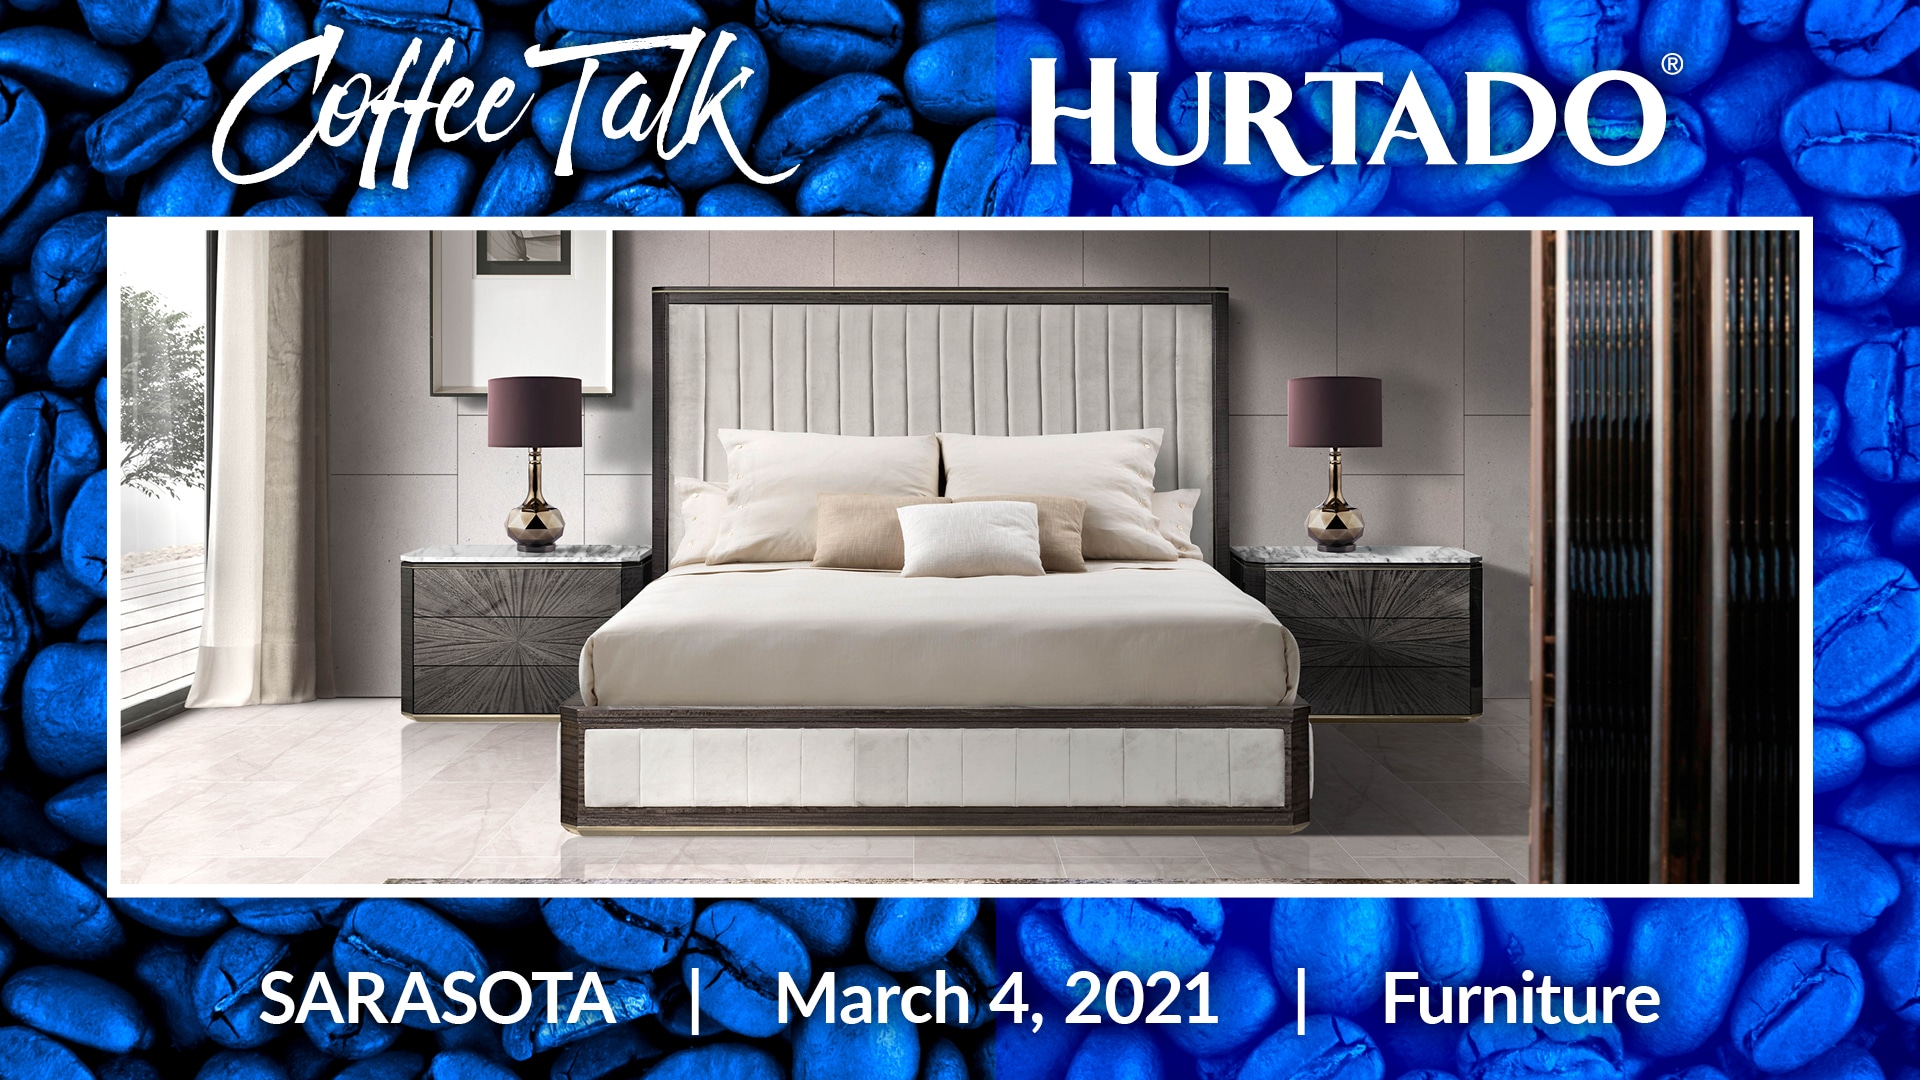 Coffee Talk with Hurtado at IDS Furniture Sarasota, March 4, 2021